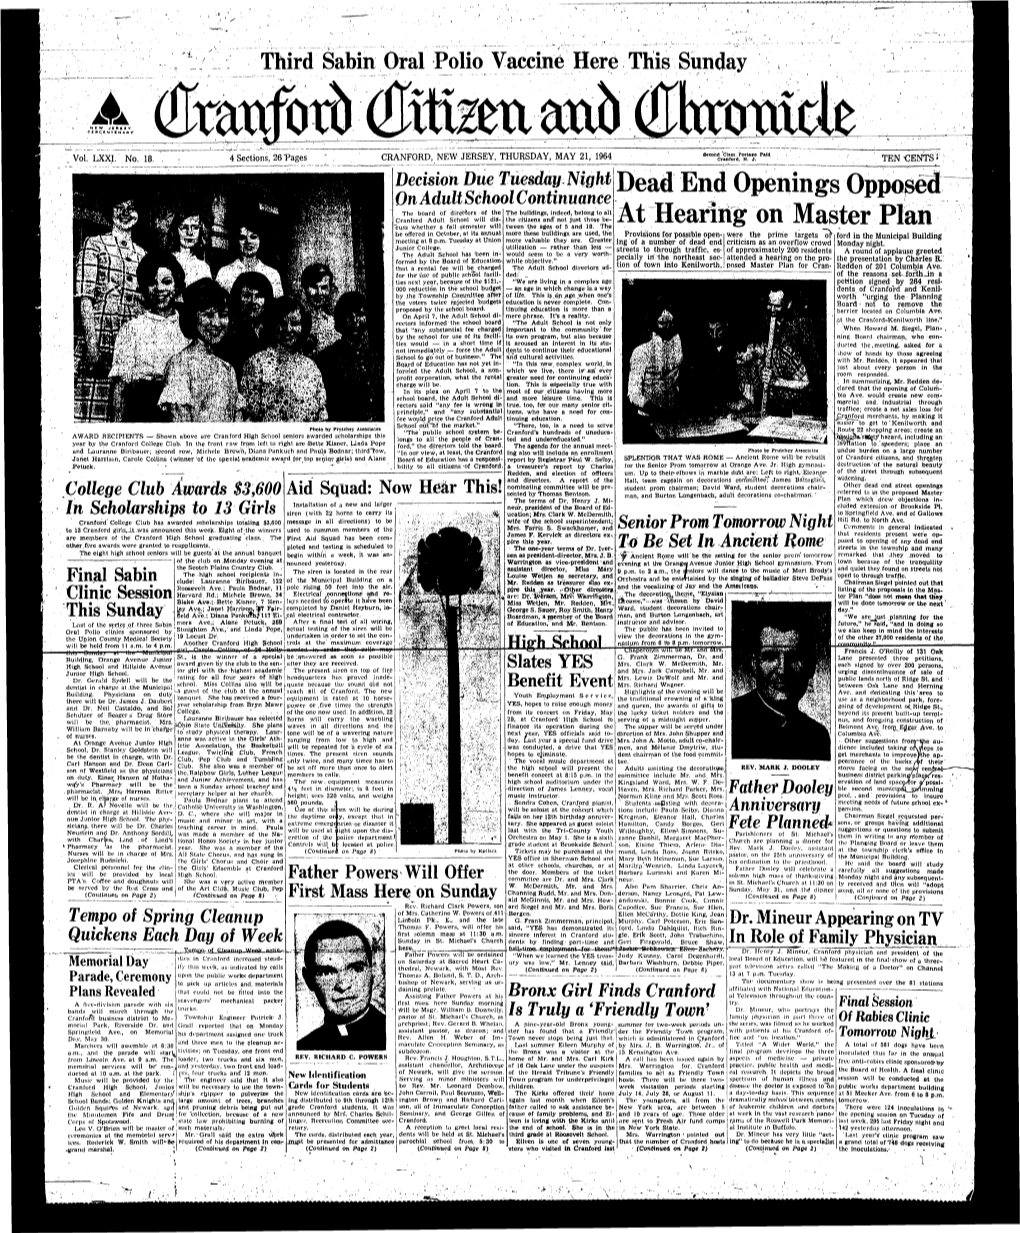 CRANFORD, NEW JERSEY, THURSDAY, MAY 21/1964 Cranford, N